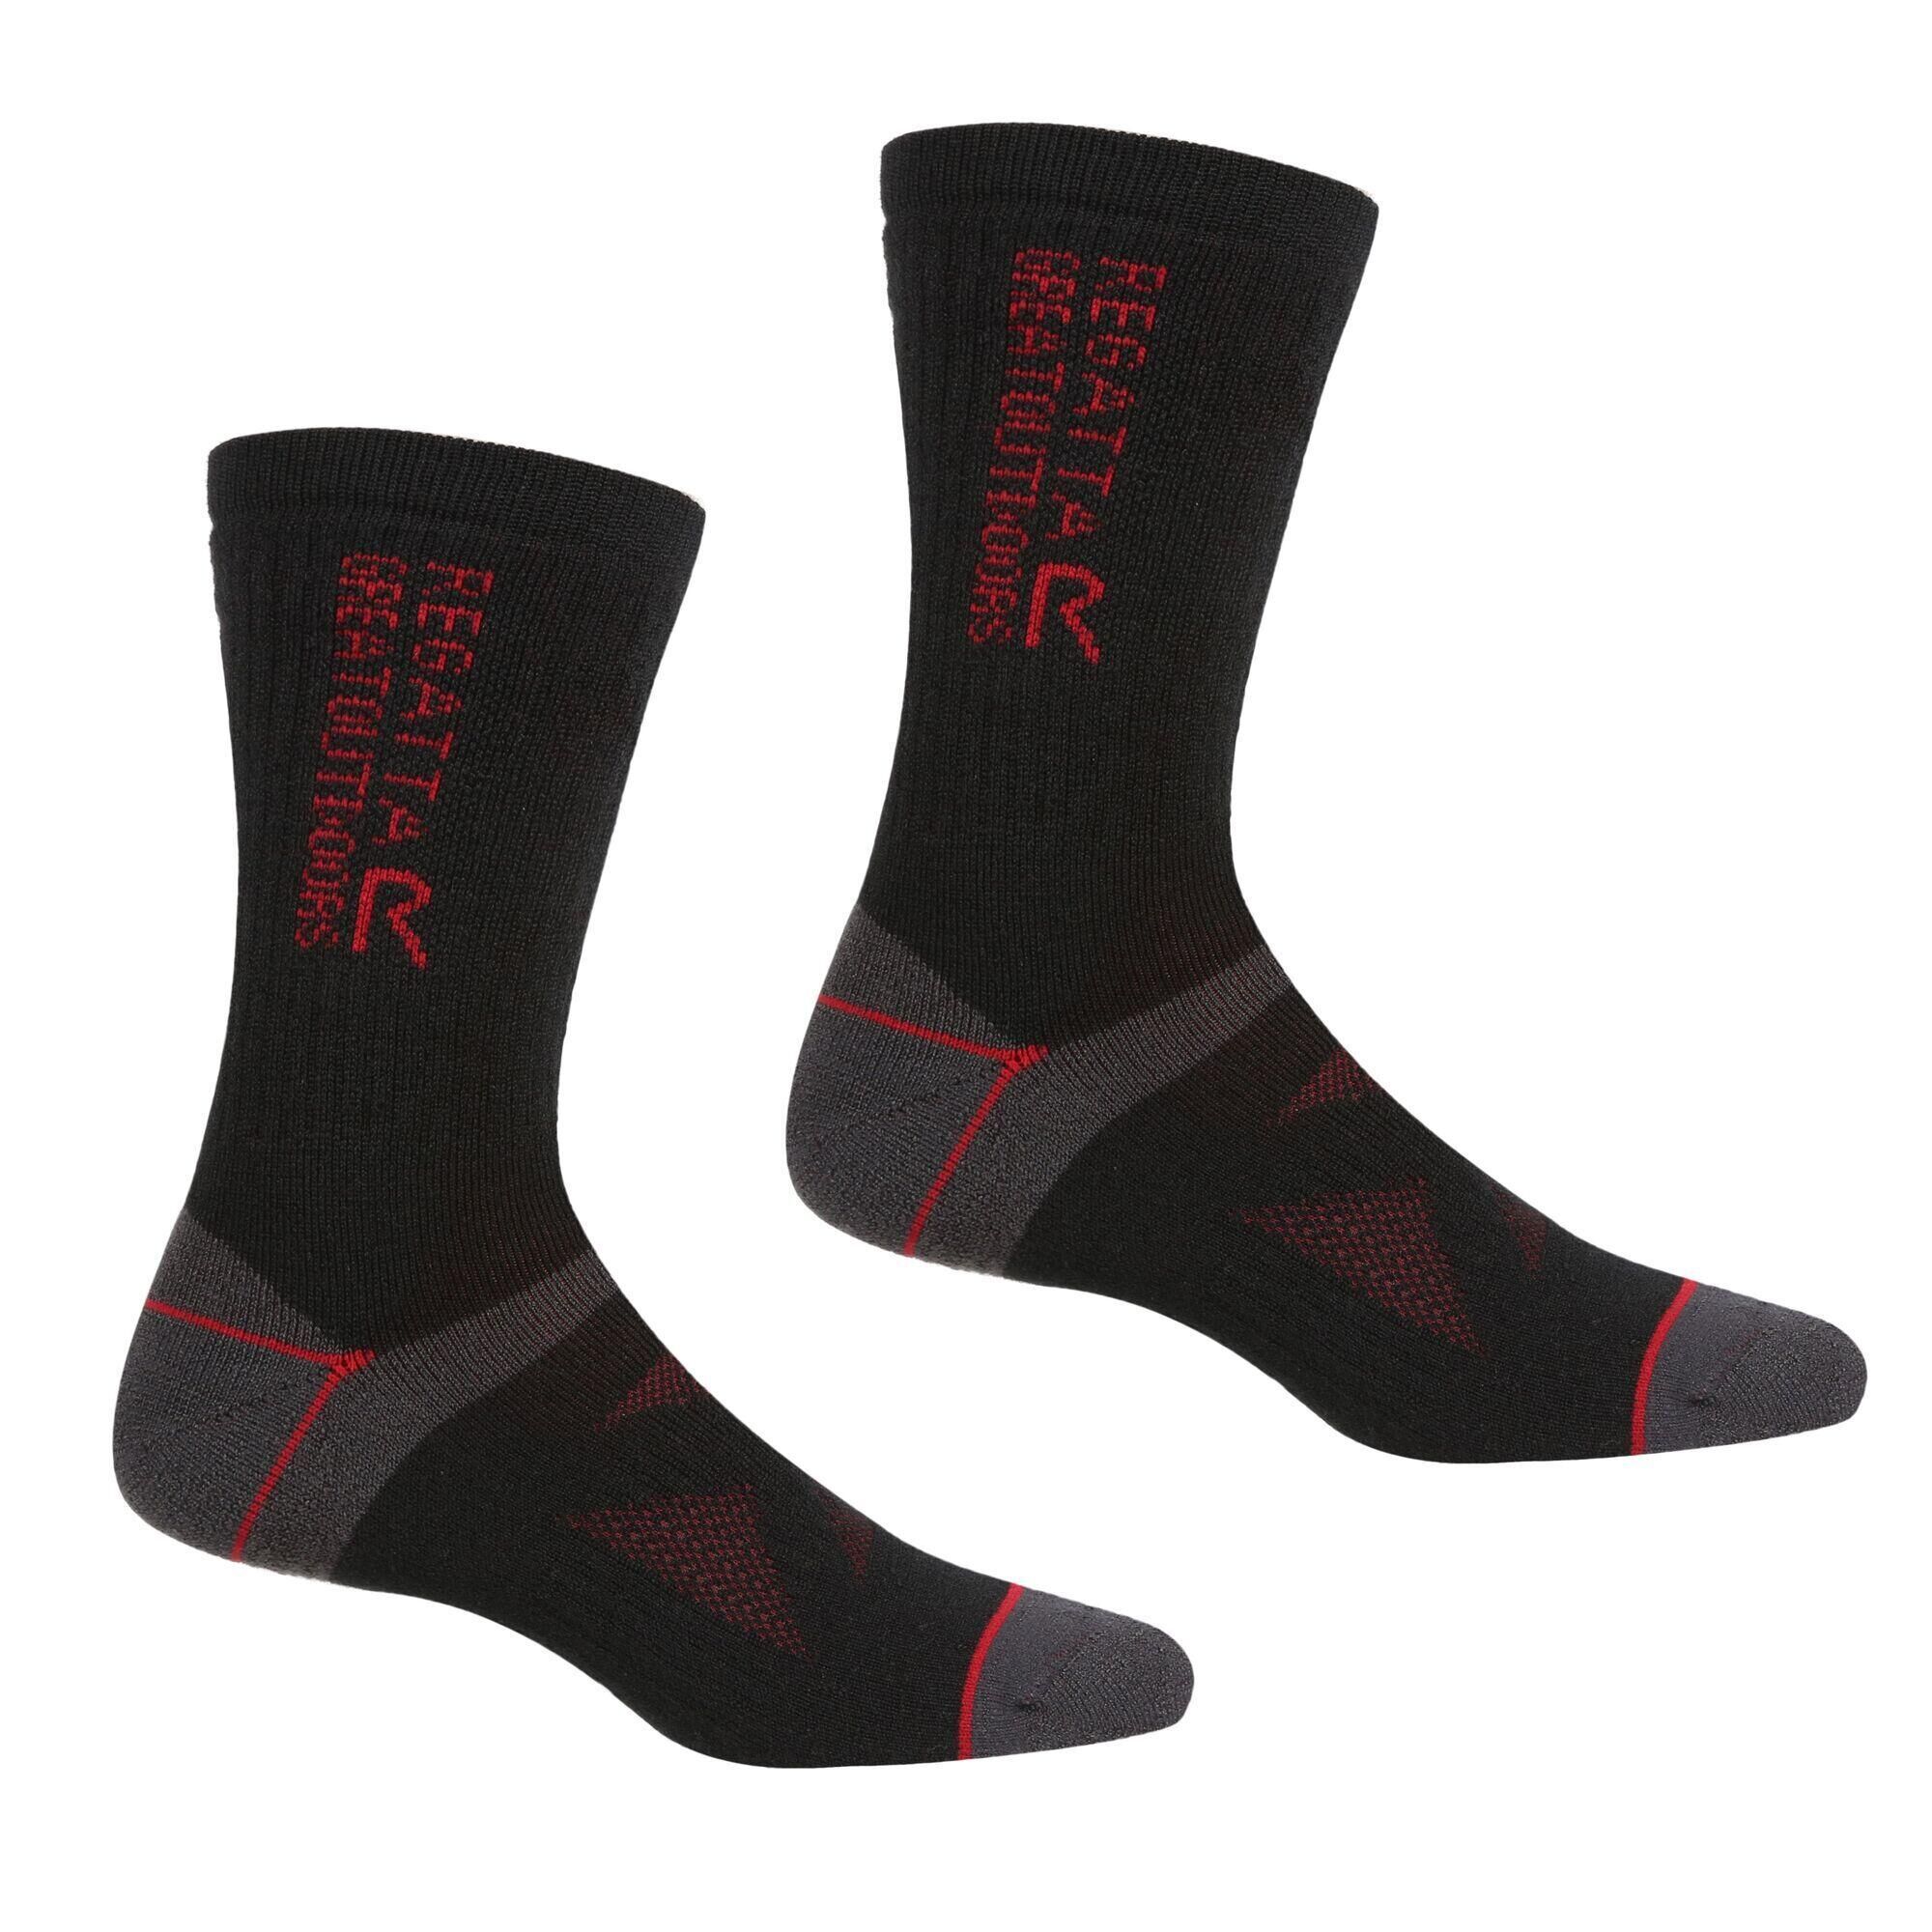 REGATTA Unisex Adult Wool Hiking Boot Socks (Pack of 2) (Black/Dark Red)